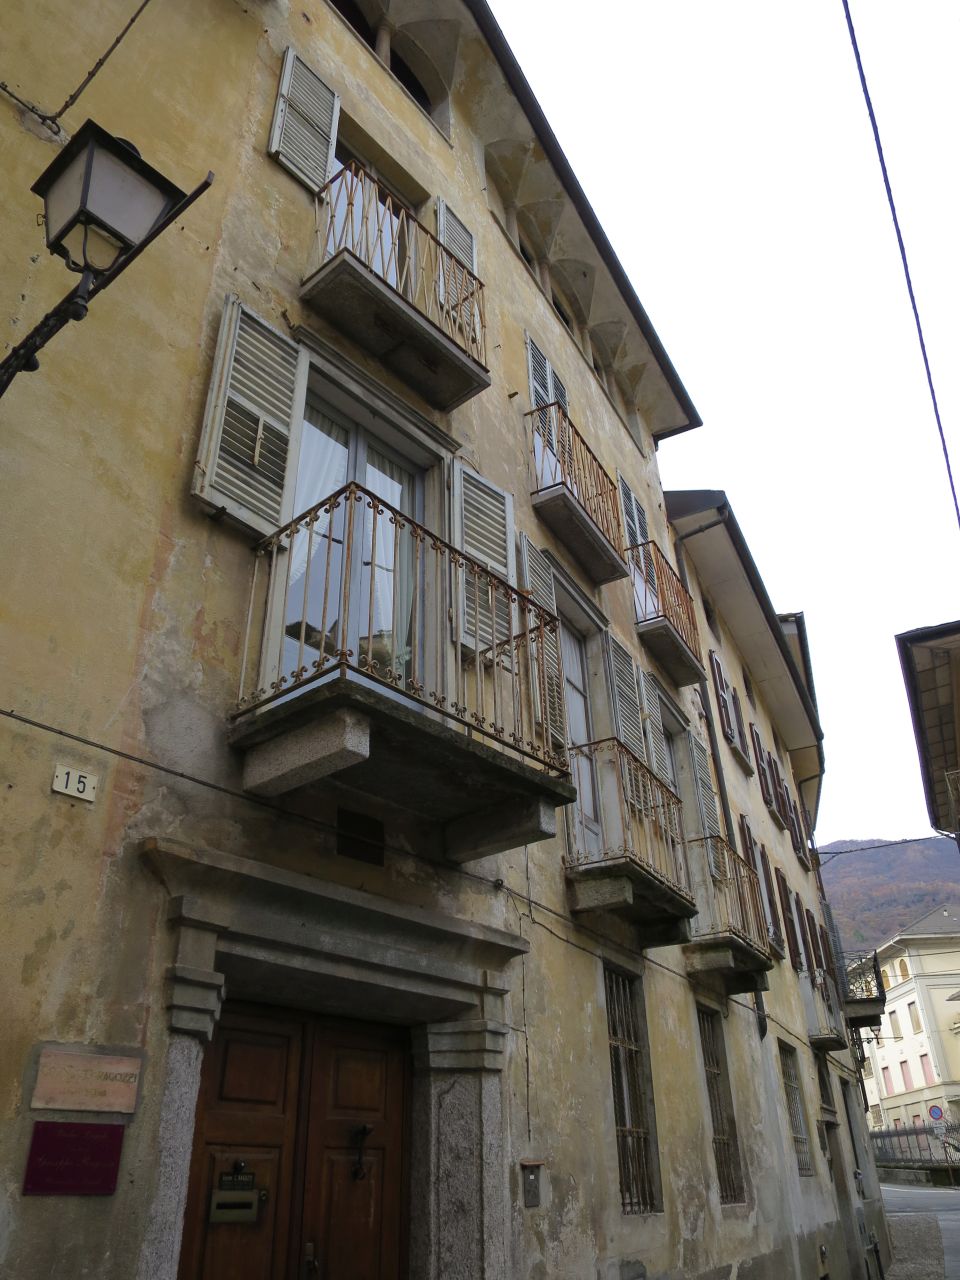 Palazzotto residenziale detto casa Valseur (palazzo, residenziale) - Varallo (VC)  (XVIII, inizio; XX)